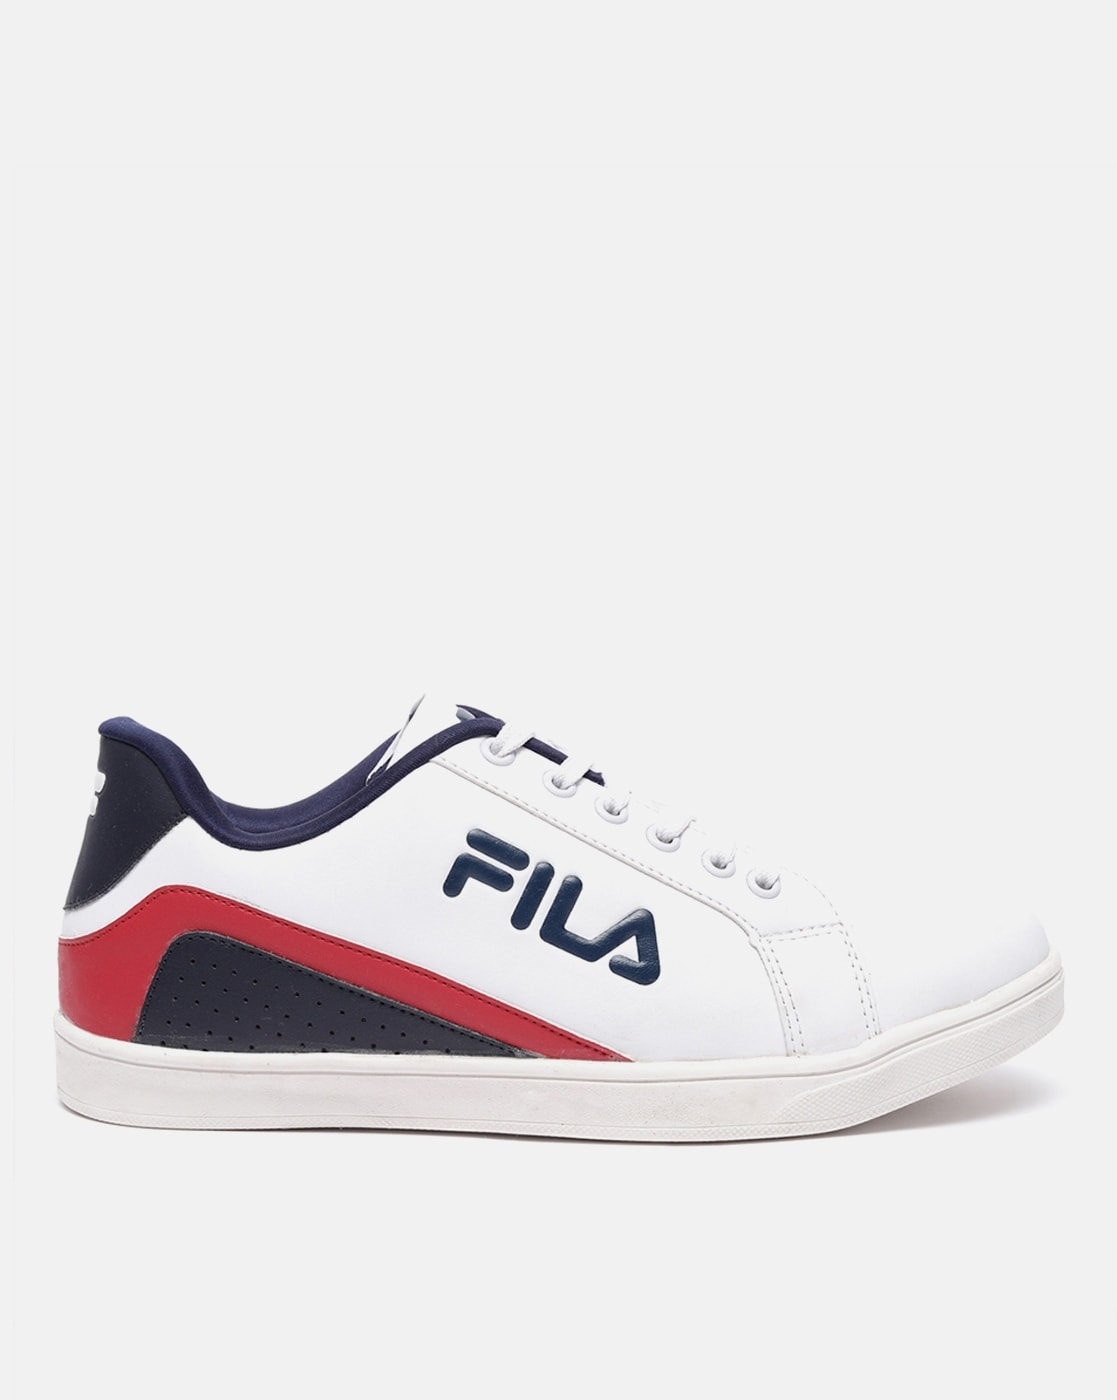 FILA - Men's White PU Outdoor Sports Shoes